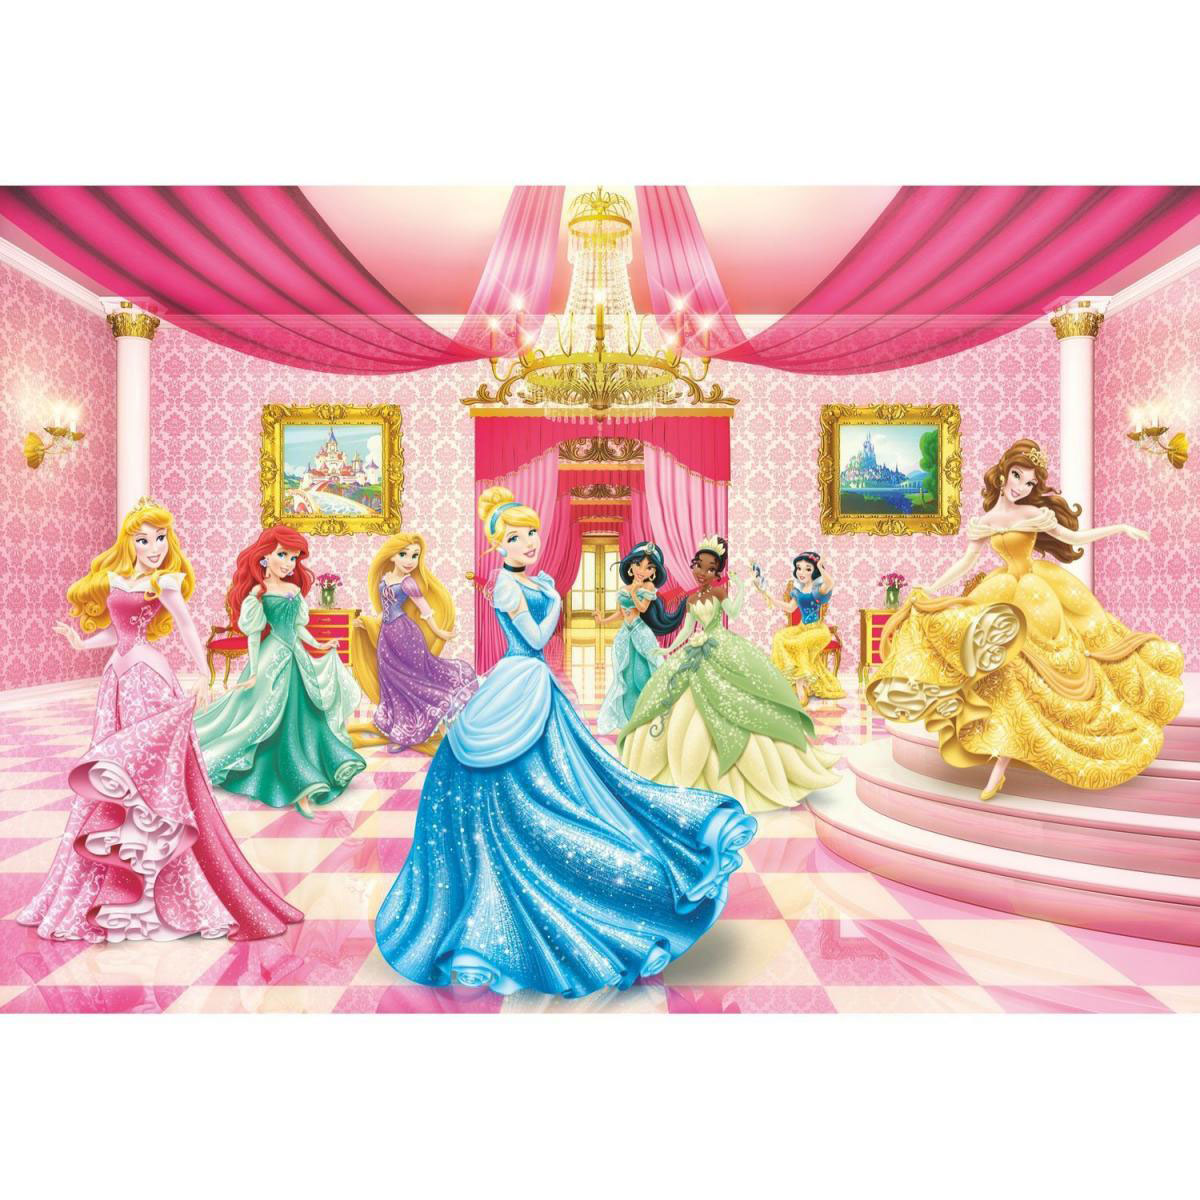 Komar Papier-Fototapete Princess Ballroom 368 | x 256162 254 cm